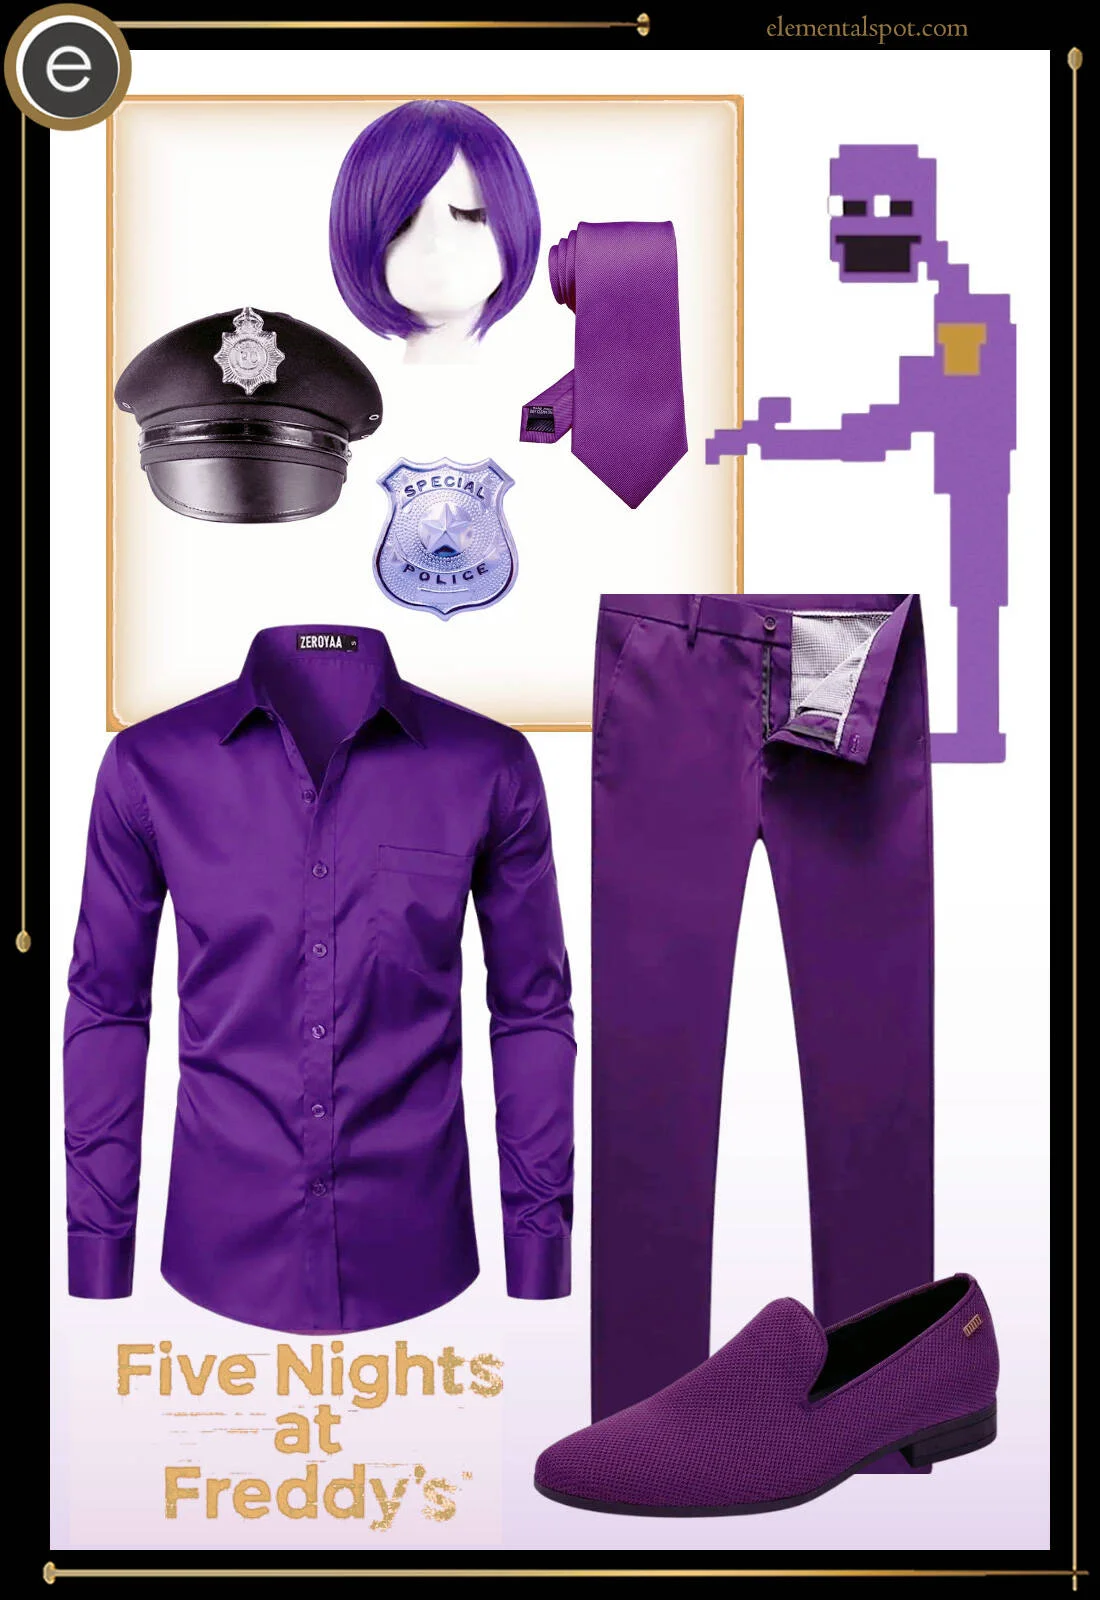 Dress Up Like Purple Man from Five Nights at Freddie's - Elemental Spot